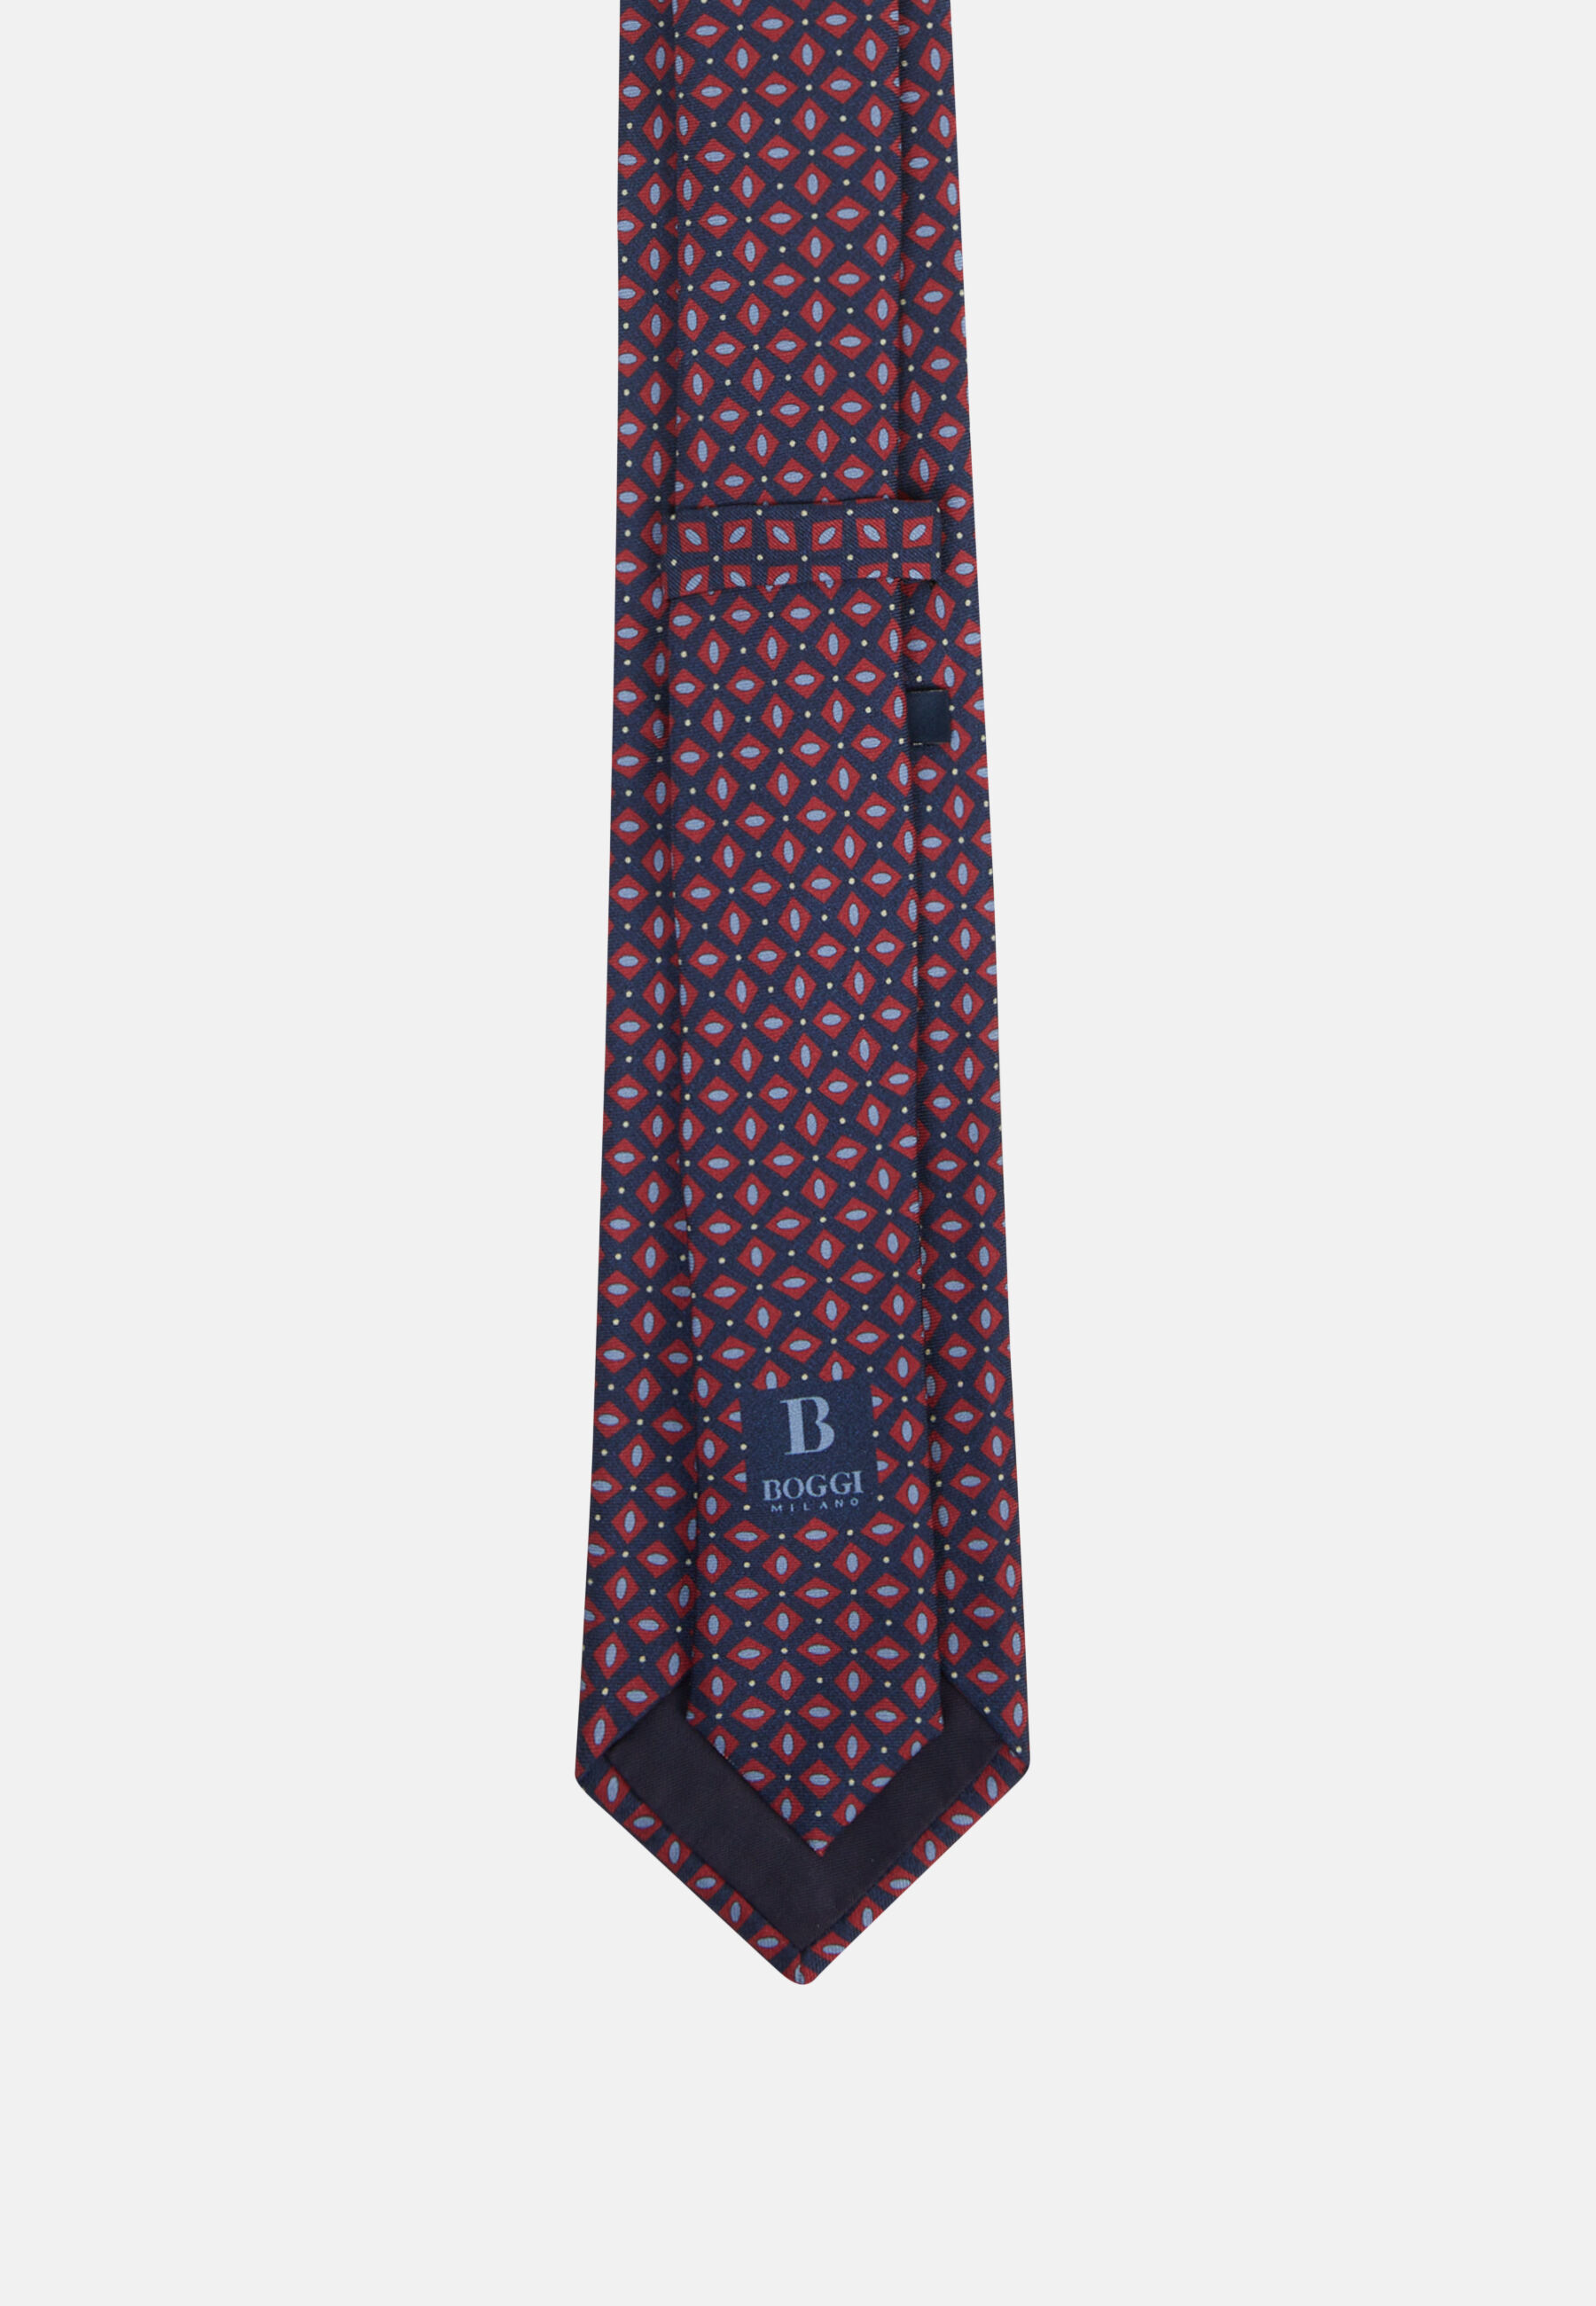 Cravatta Motivo Geometrico In Seta Boggi Uomo Accessori Cravatte e accessori Cravatte 